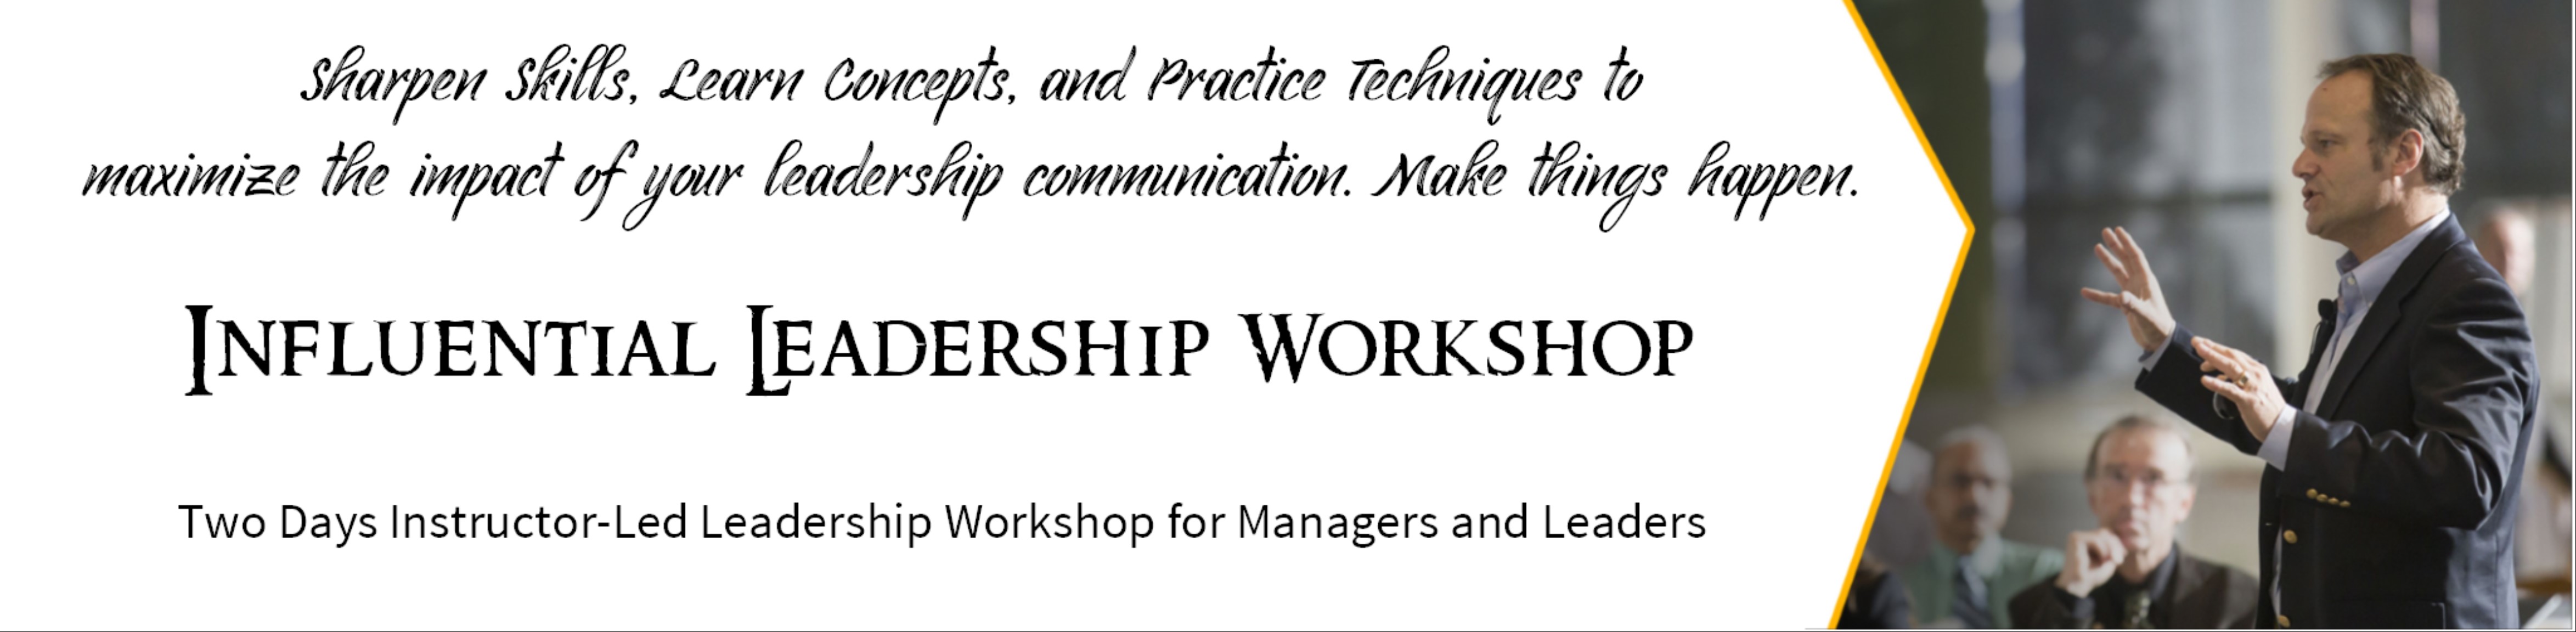 Influential Leadership - Workshop for Managers and Leaders @ Mumbai, Mumbai, Maharashtra, India